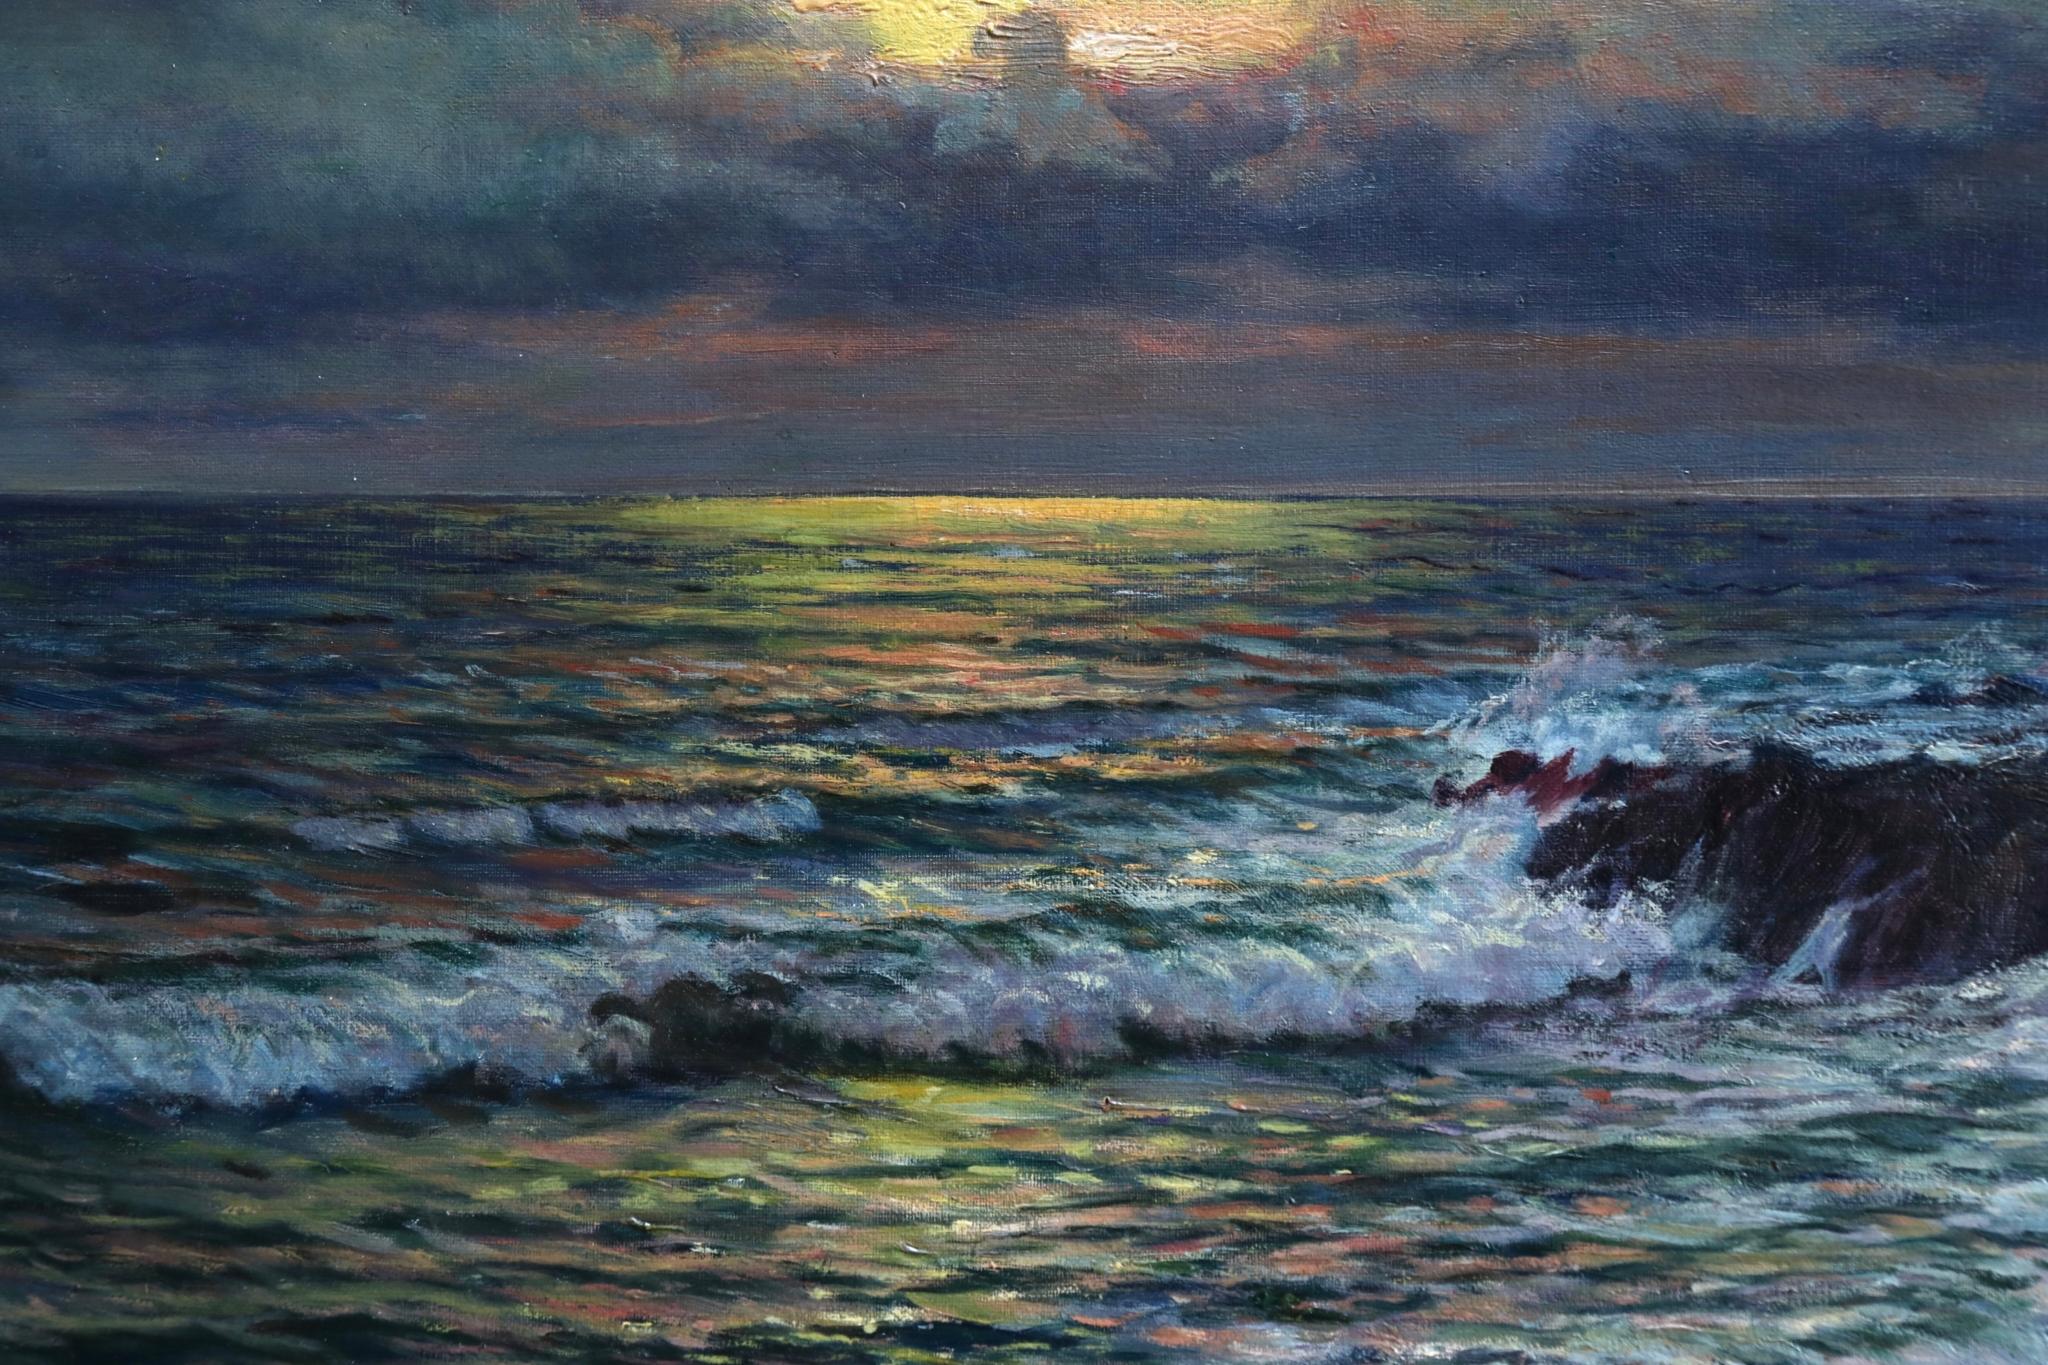 Sunset - Impressionist Oil, Sunset over Seascape by Vartan Makhokhian 2